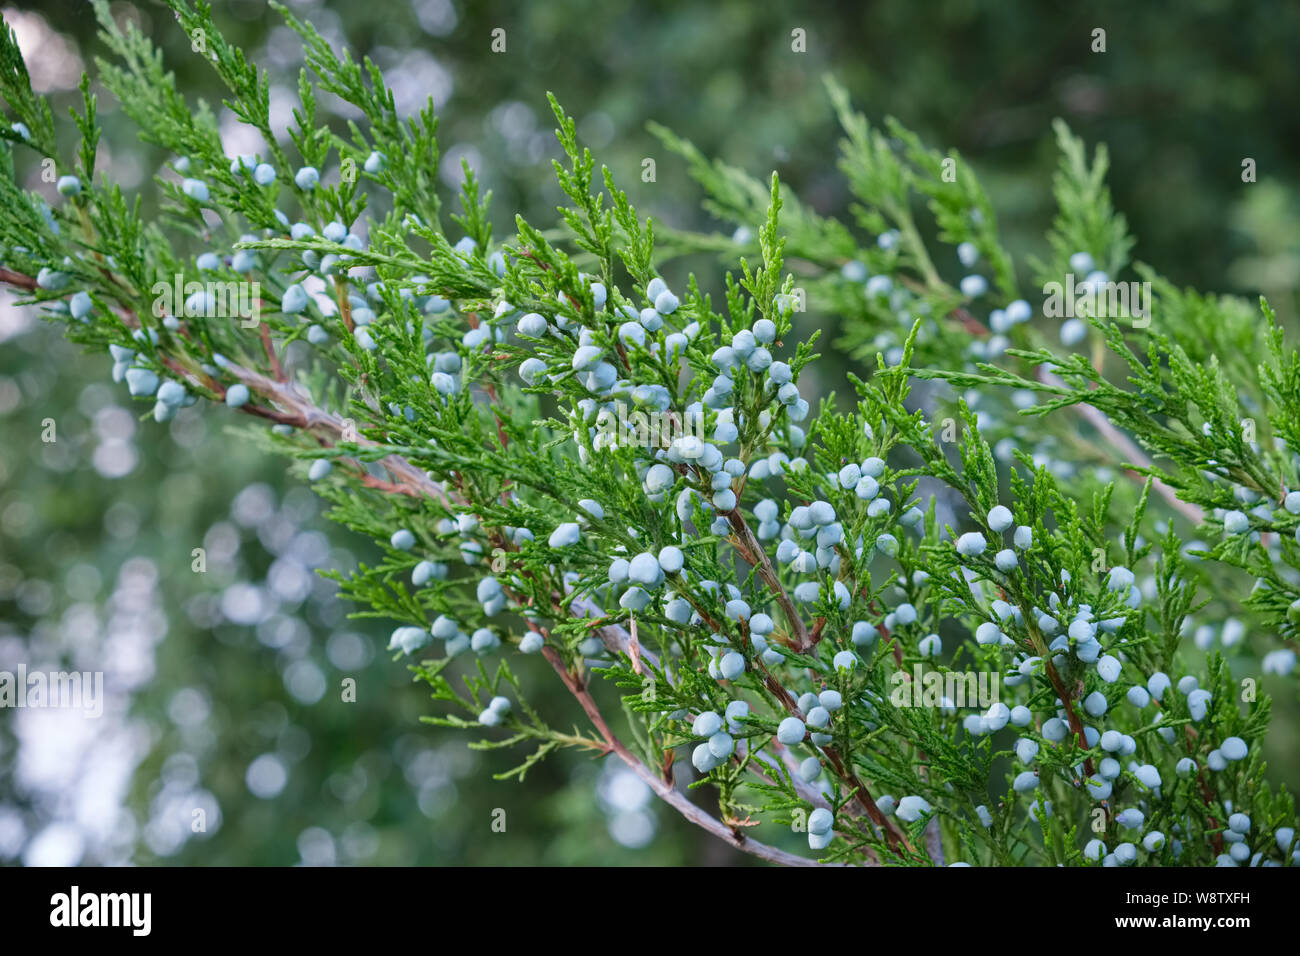 Juniper bush branch with berries. Stock Photo